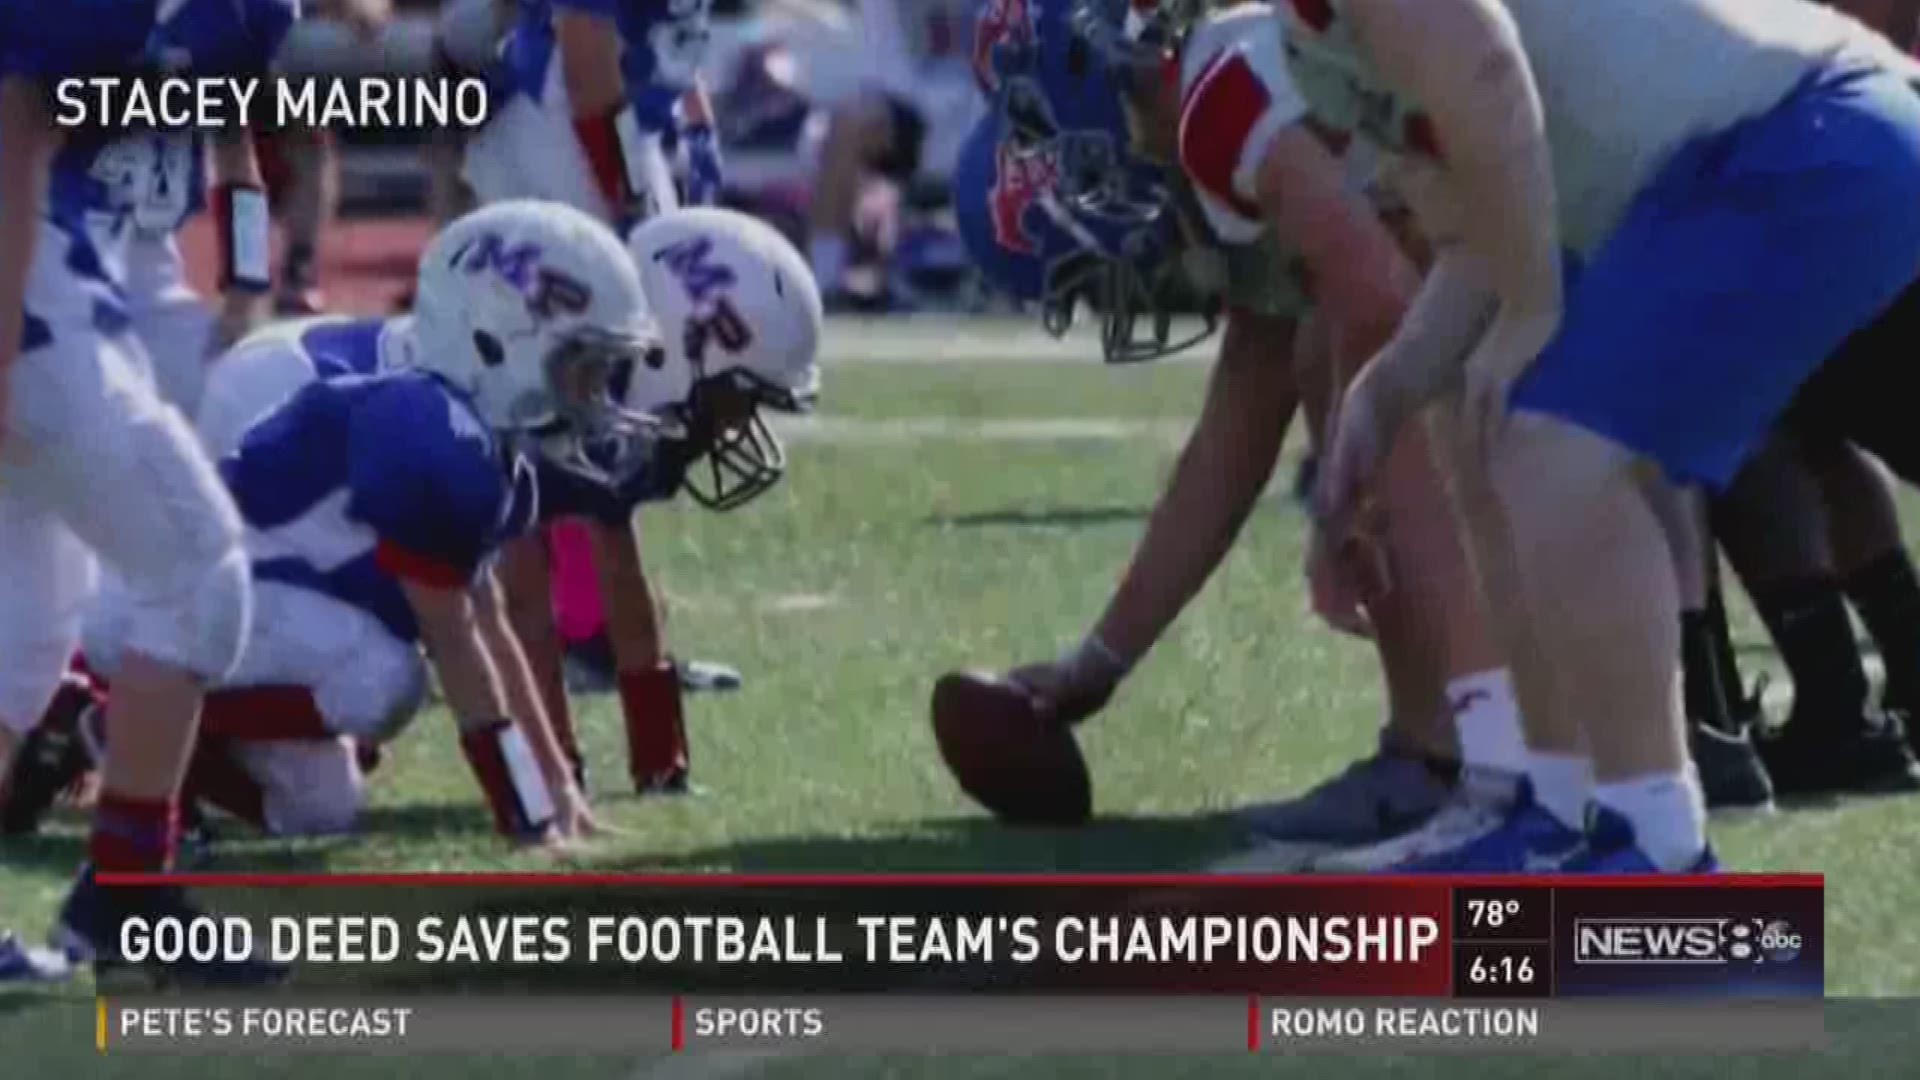 Good deed saves football team's championship